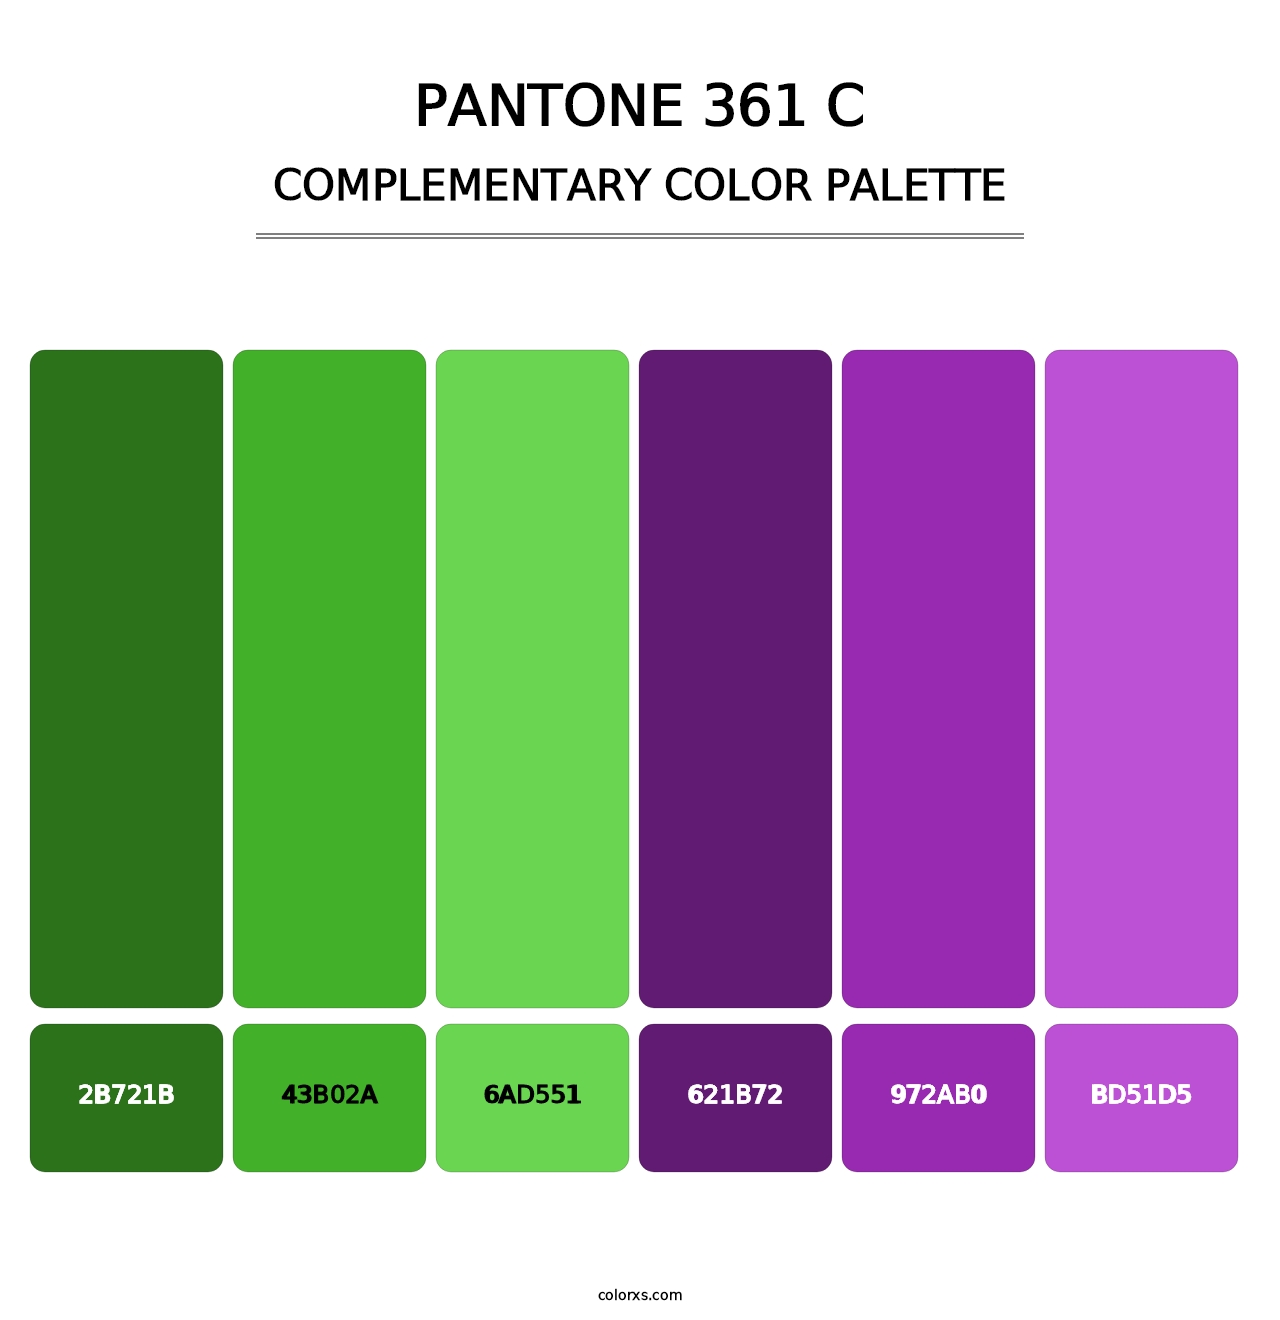 PANTONE 361 C - Complementary Color Palette